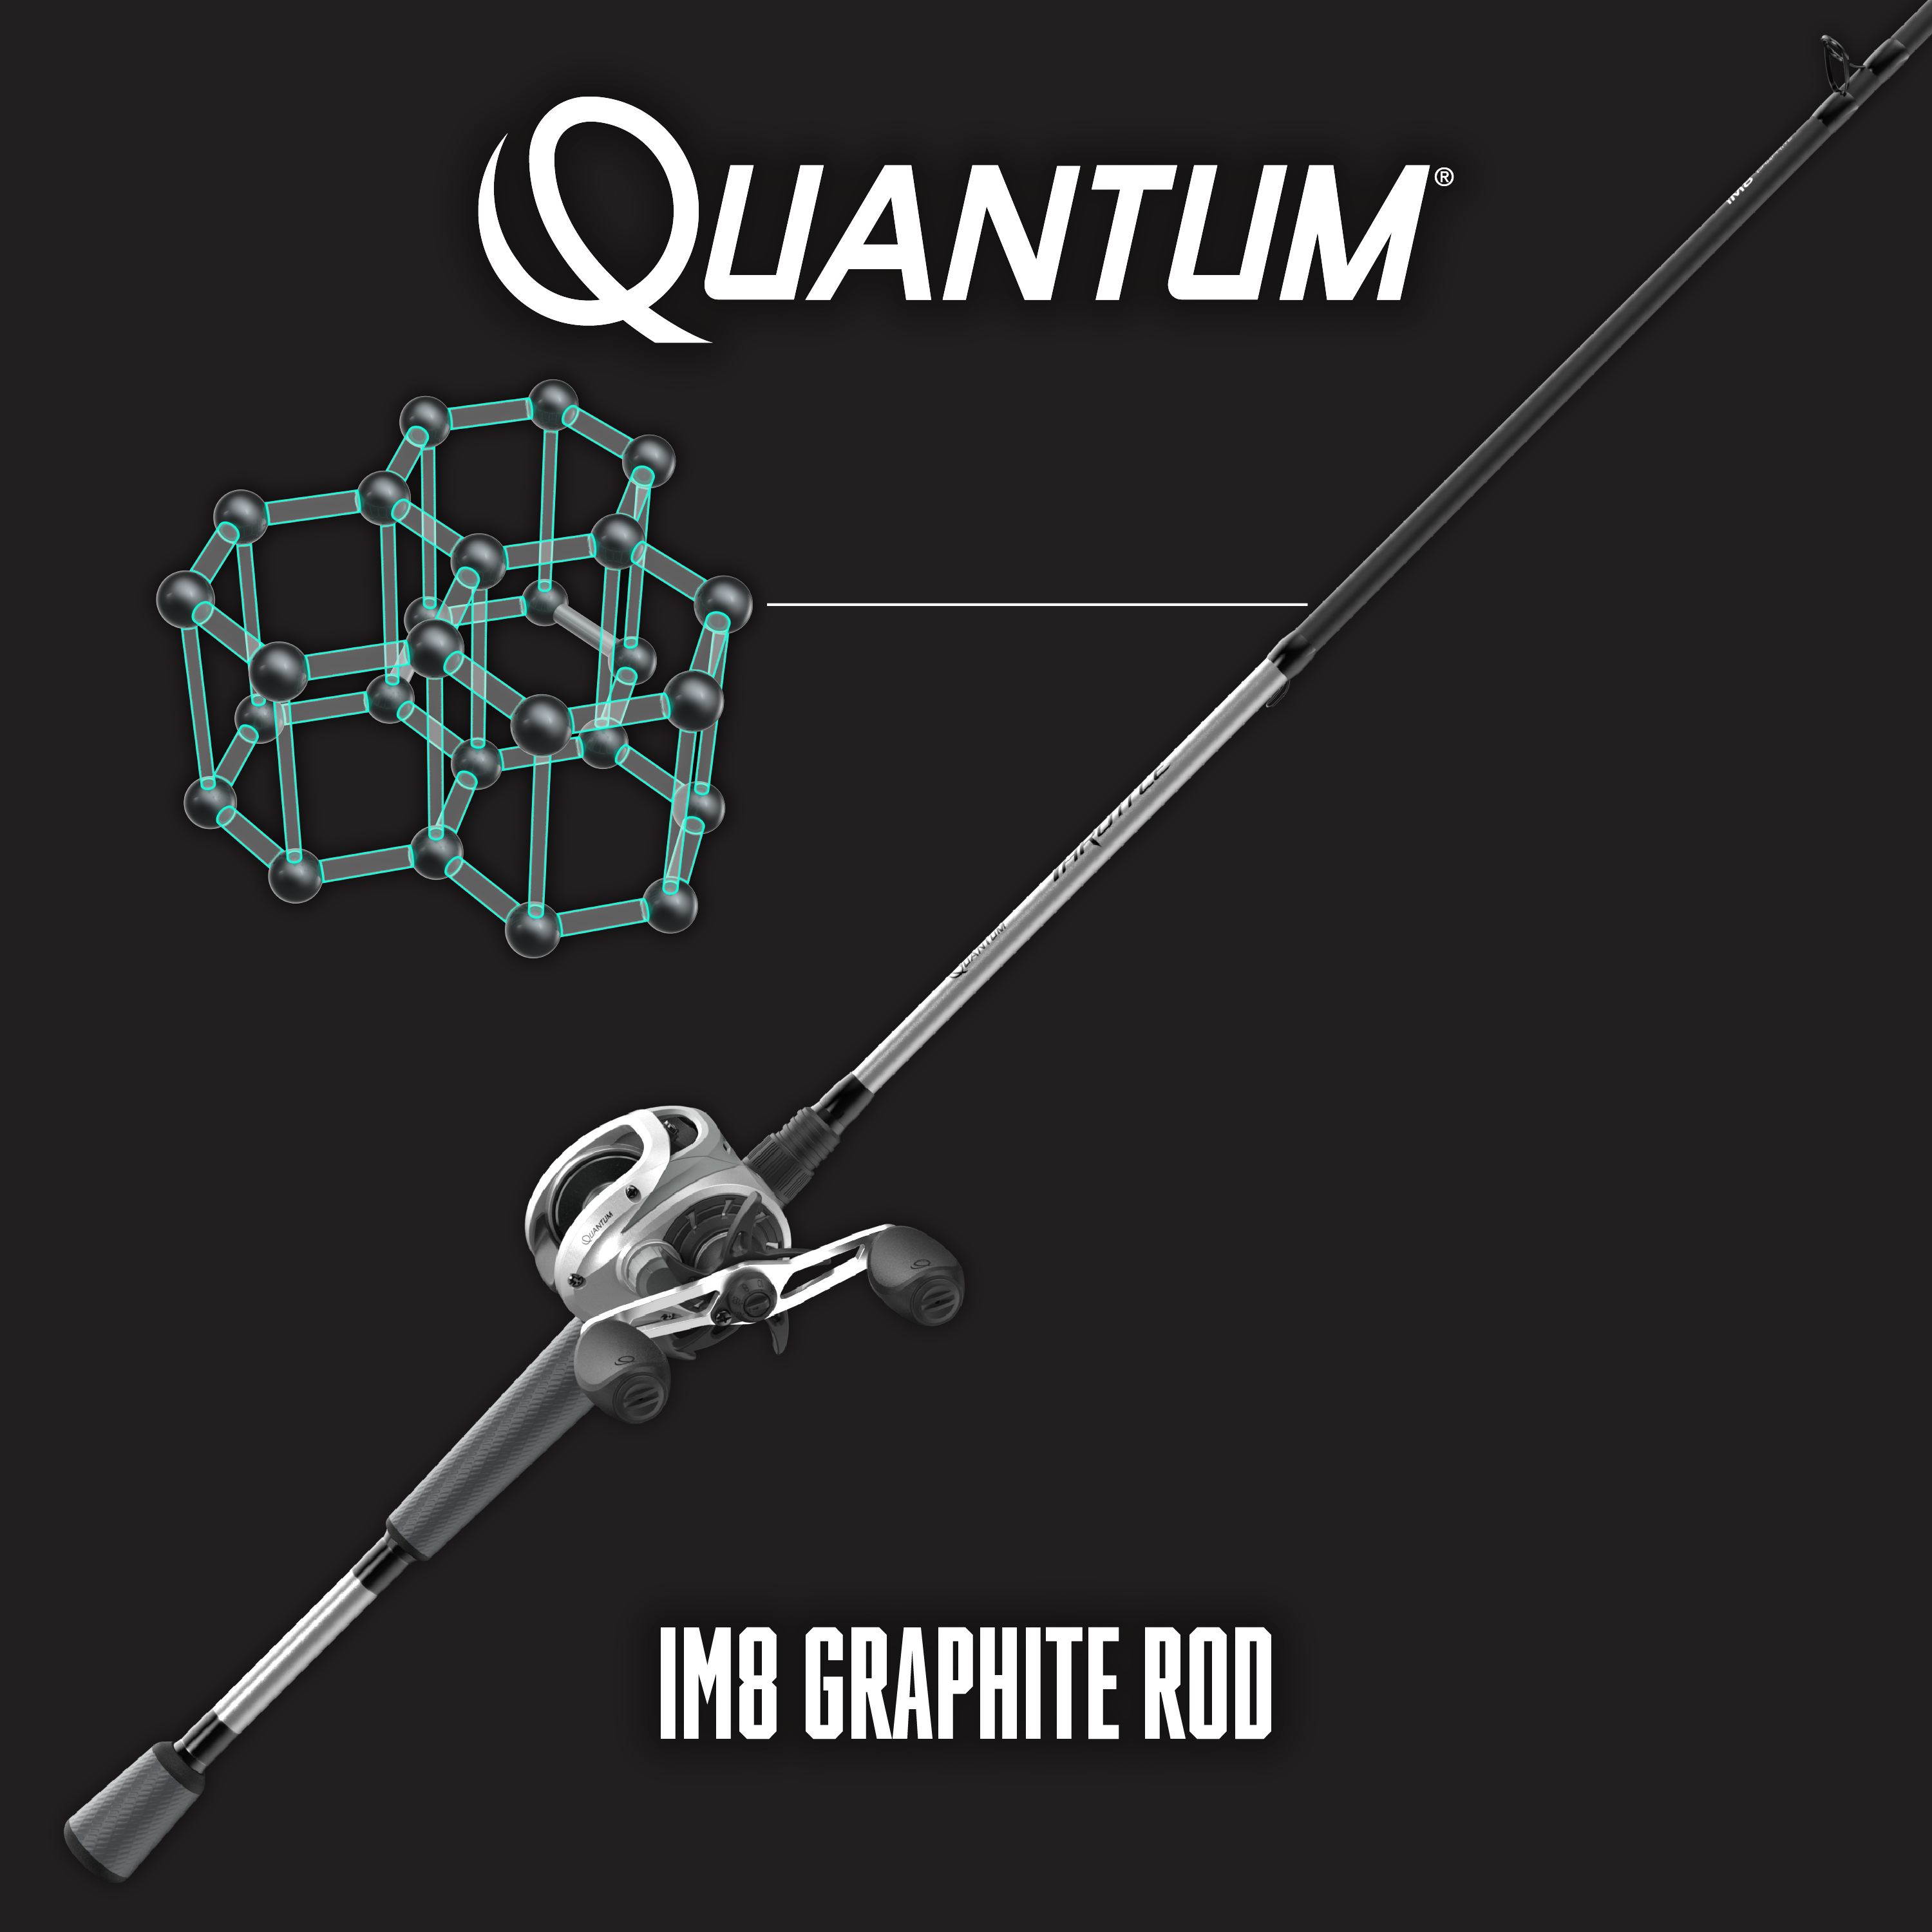 Throttle - Baitcast - Combo, Quantum Fishing